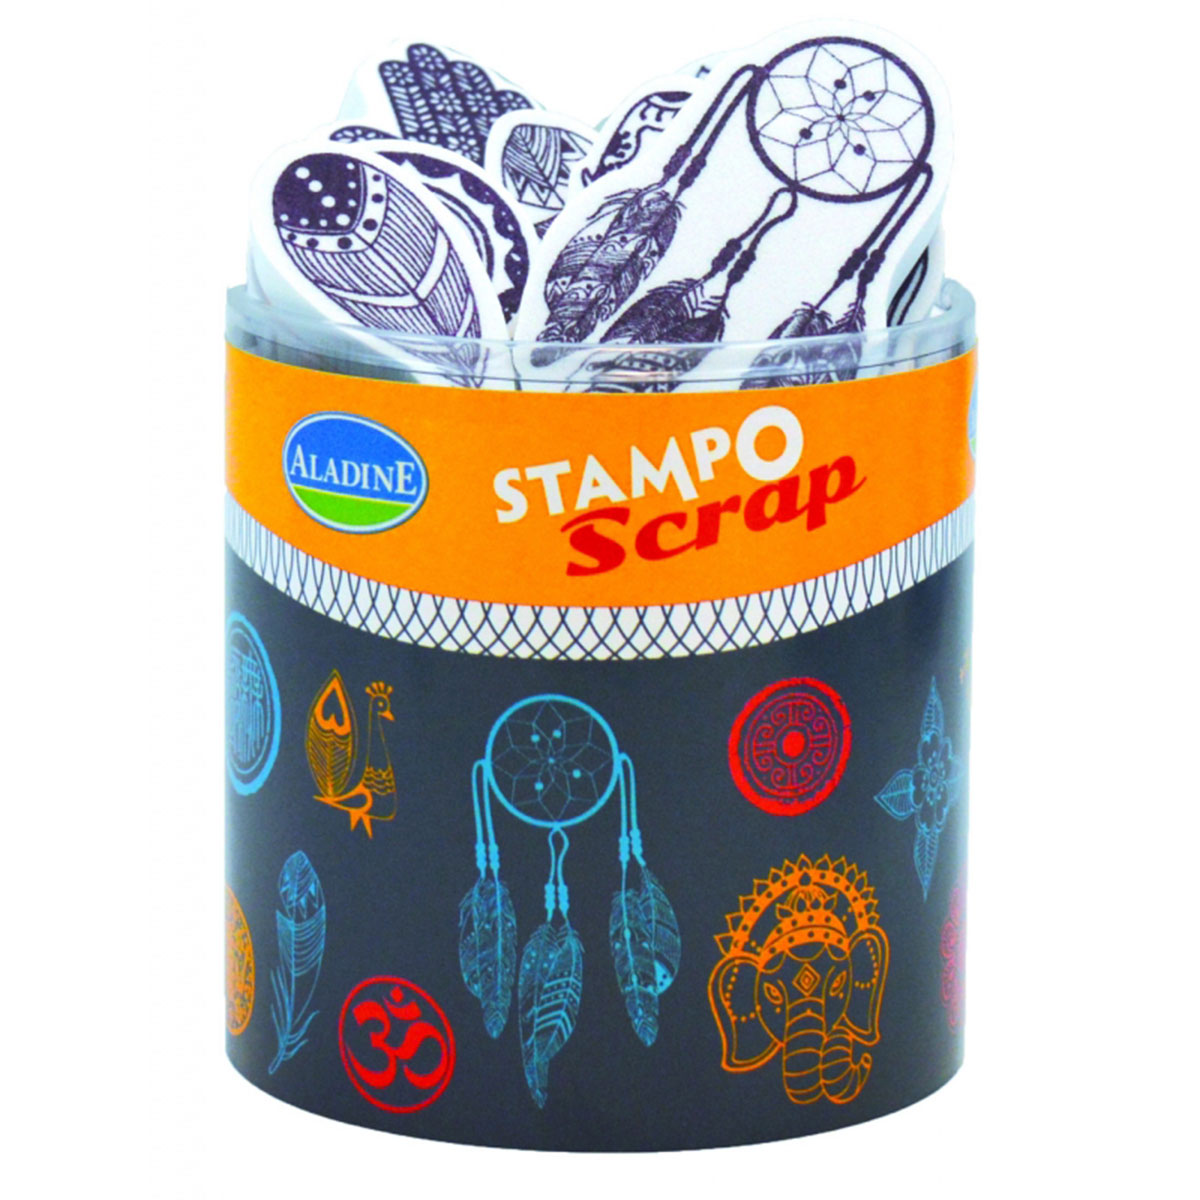 Stampo scrap Ethnic